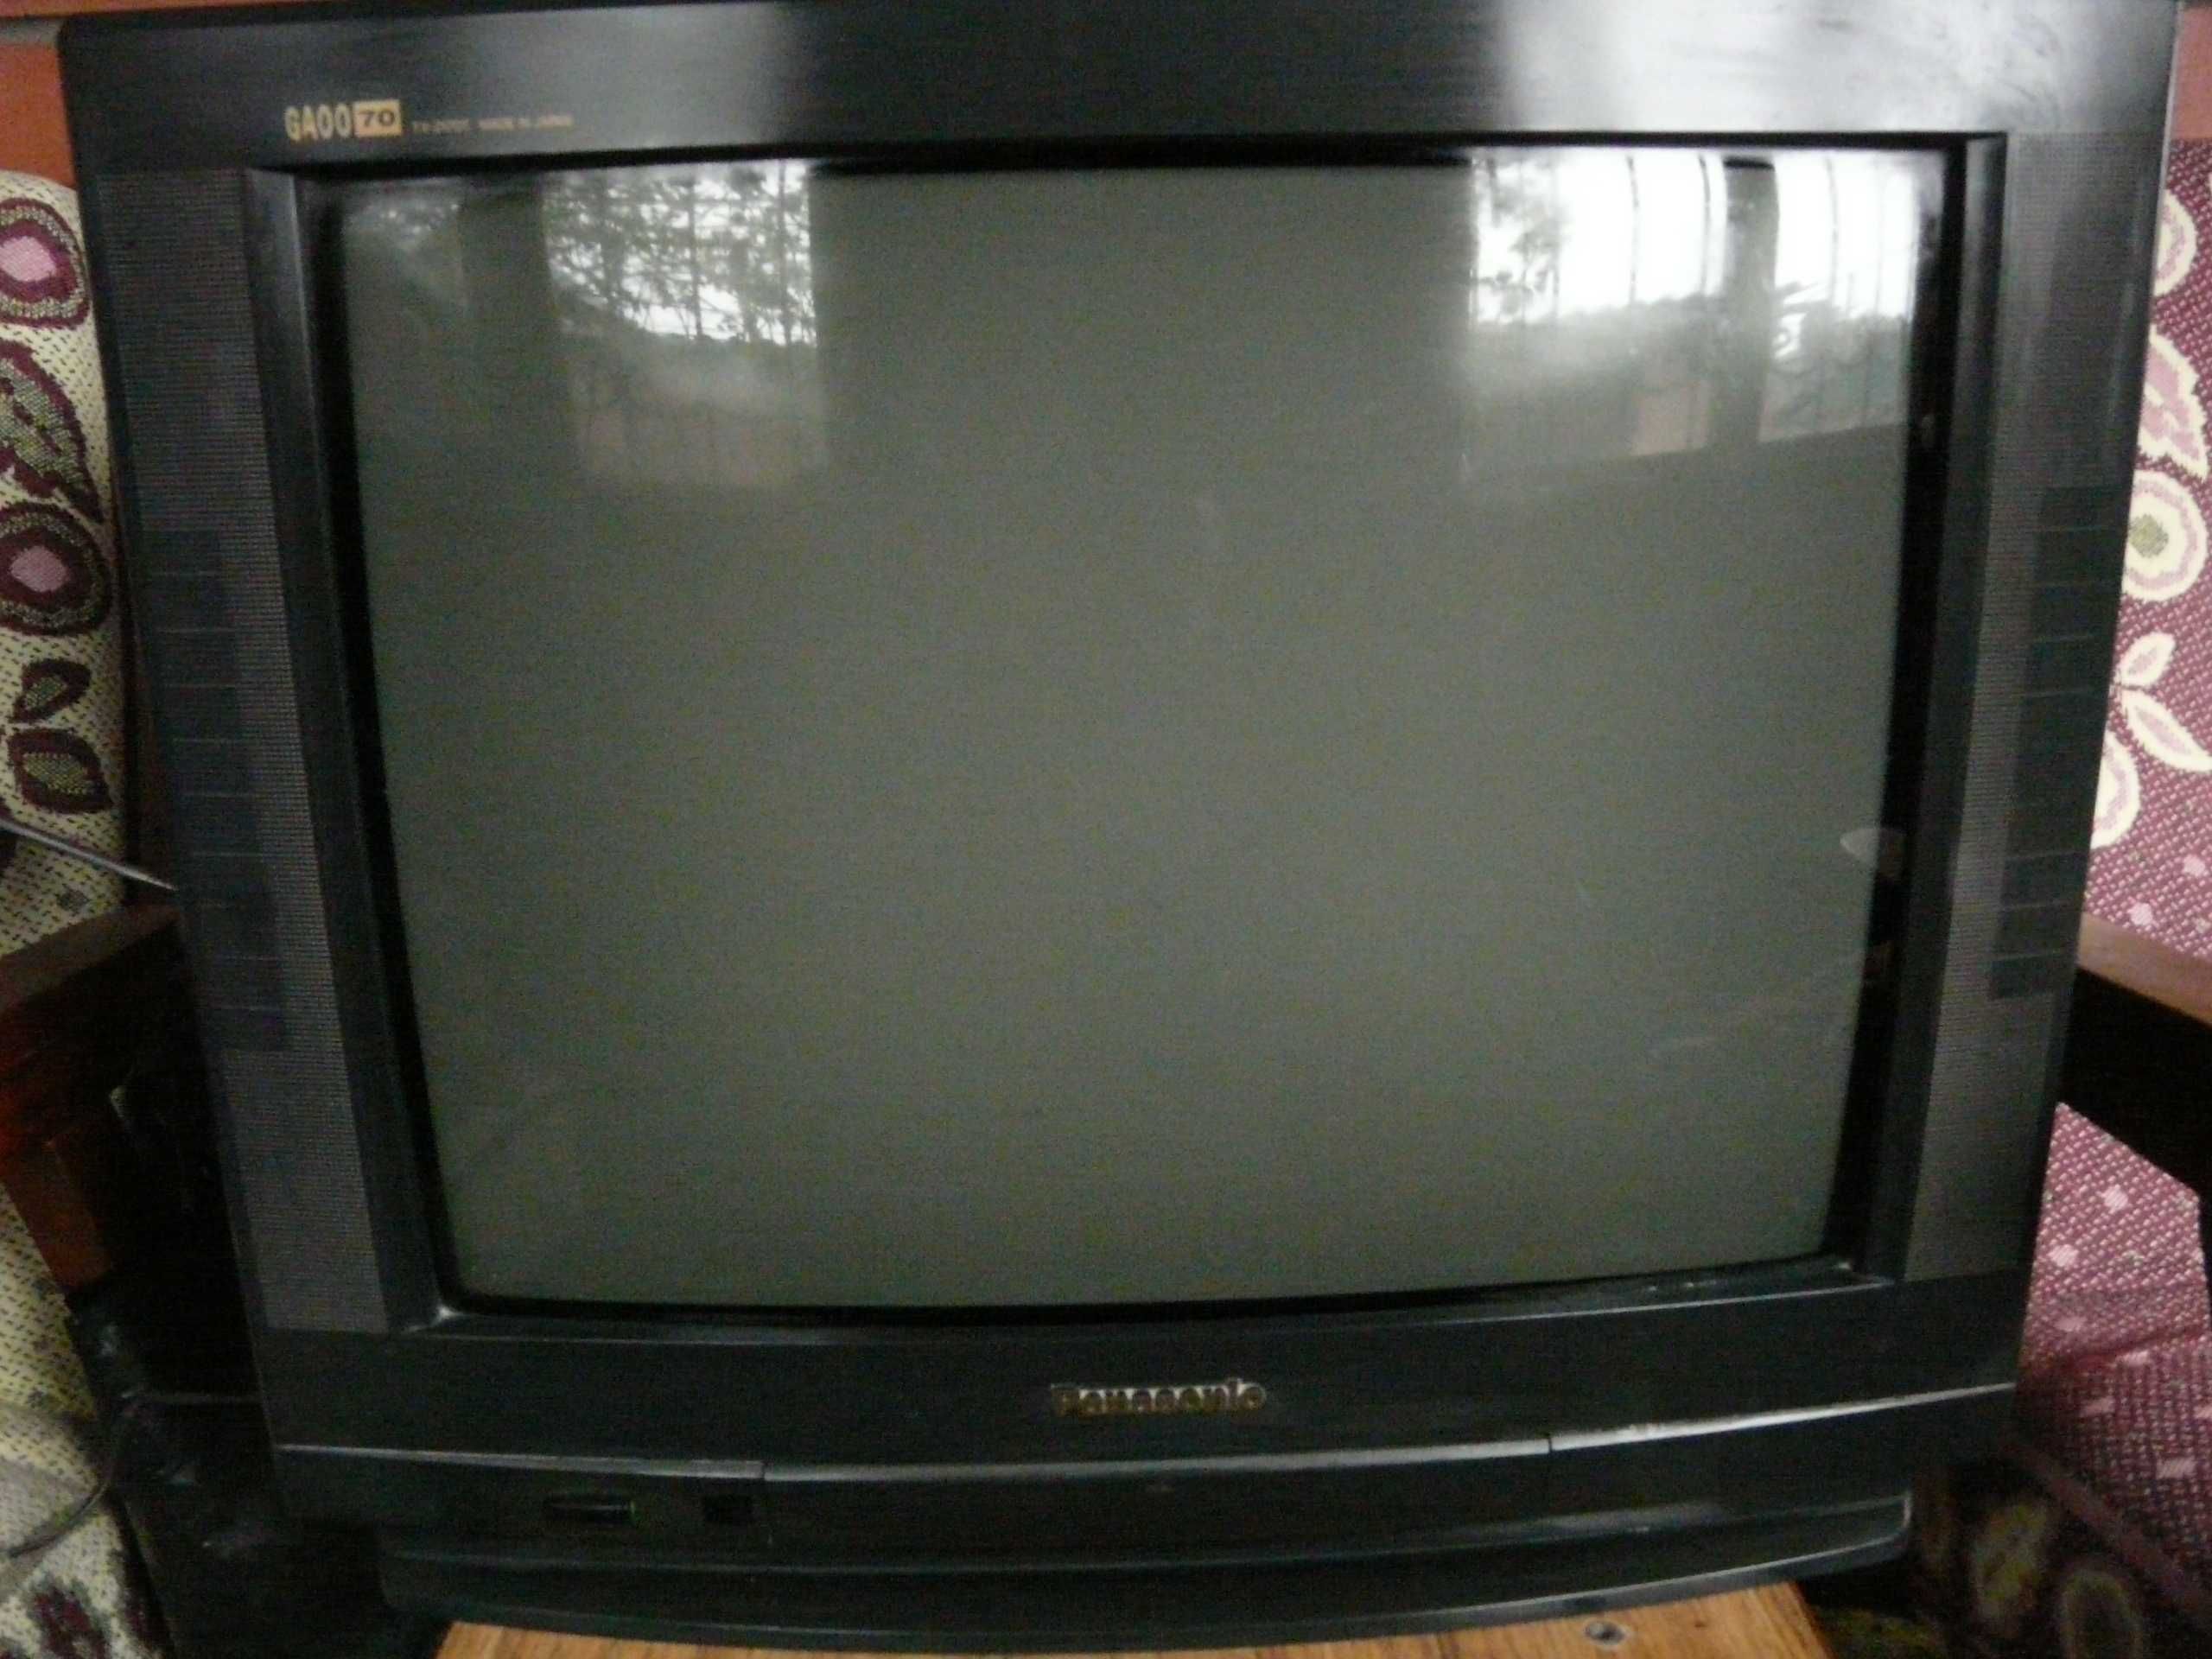 В Луганске продаю телевизор Panasonic ТХ-2170Т